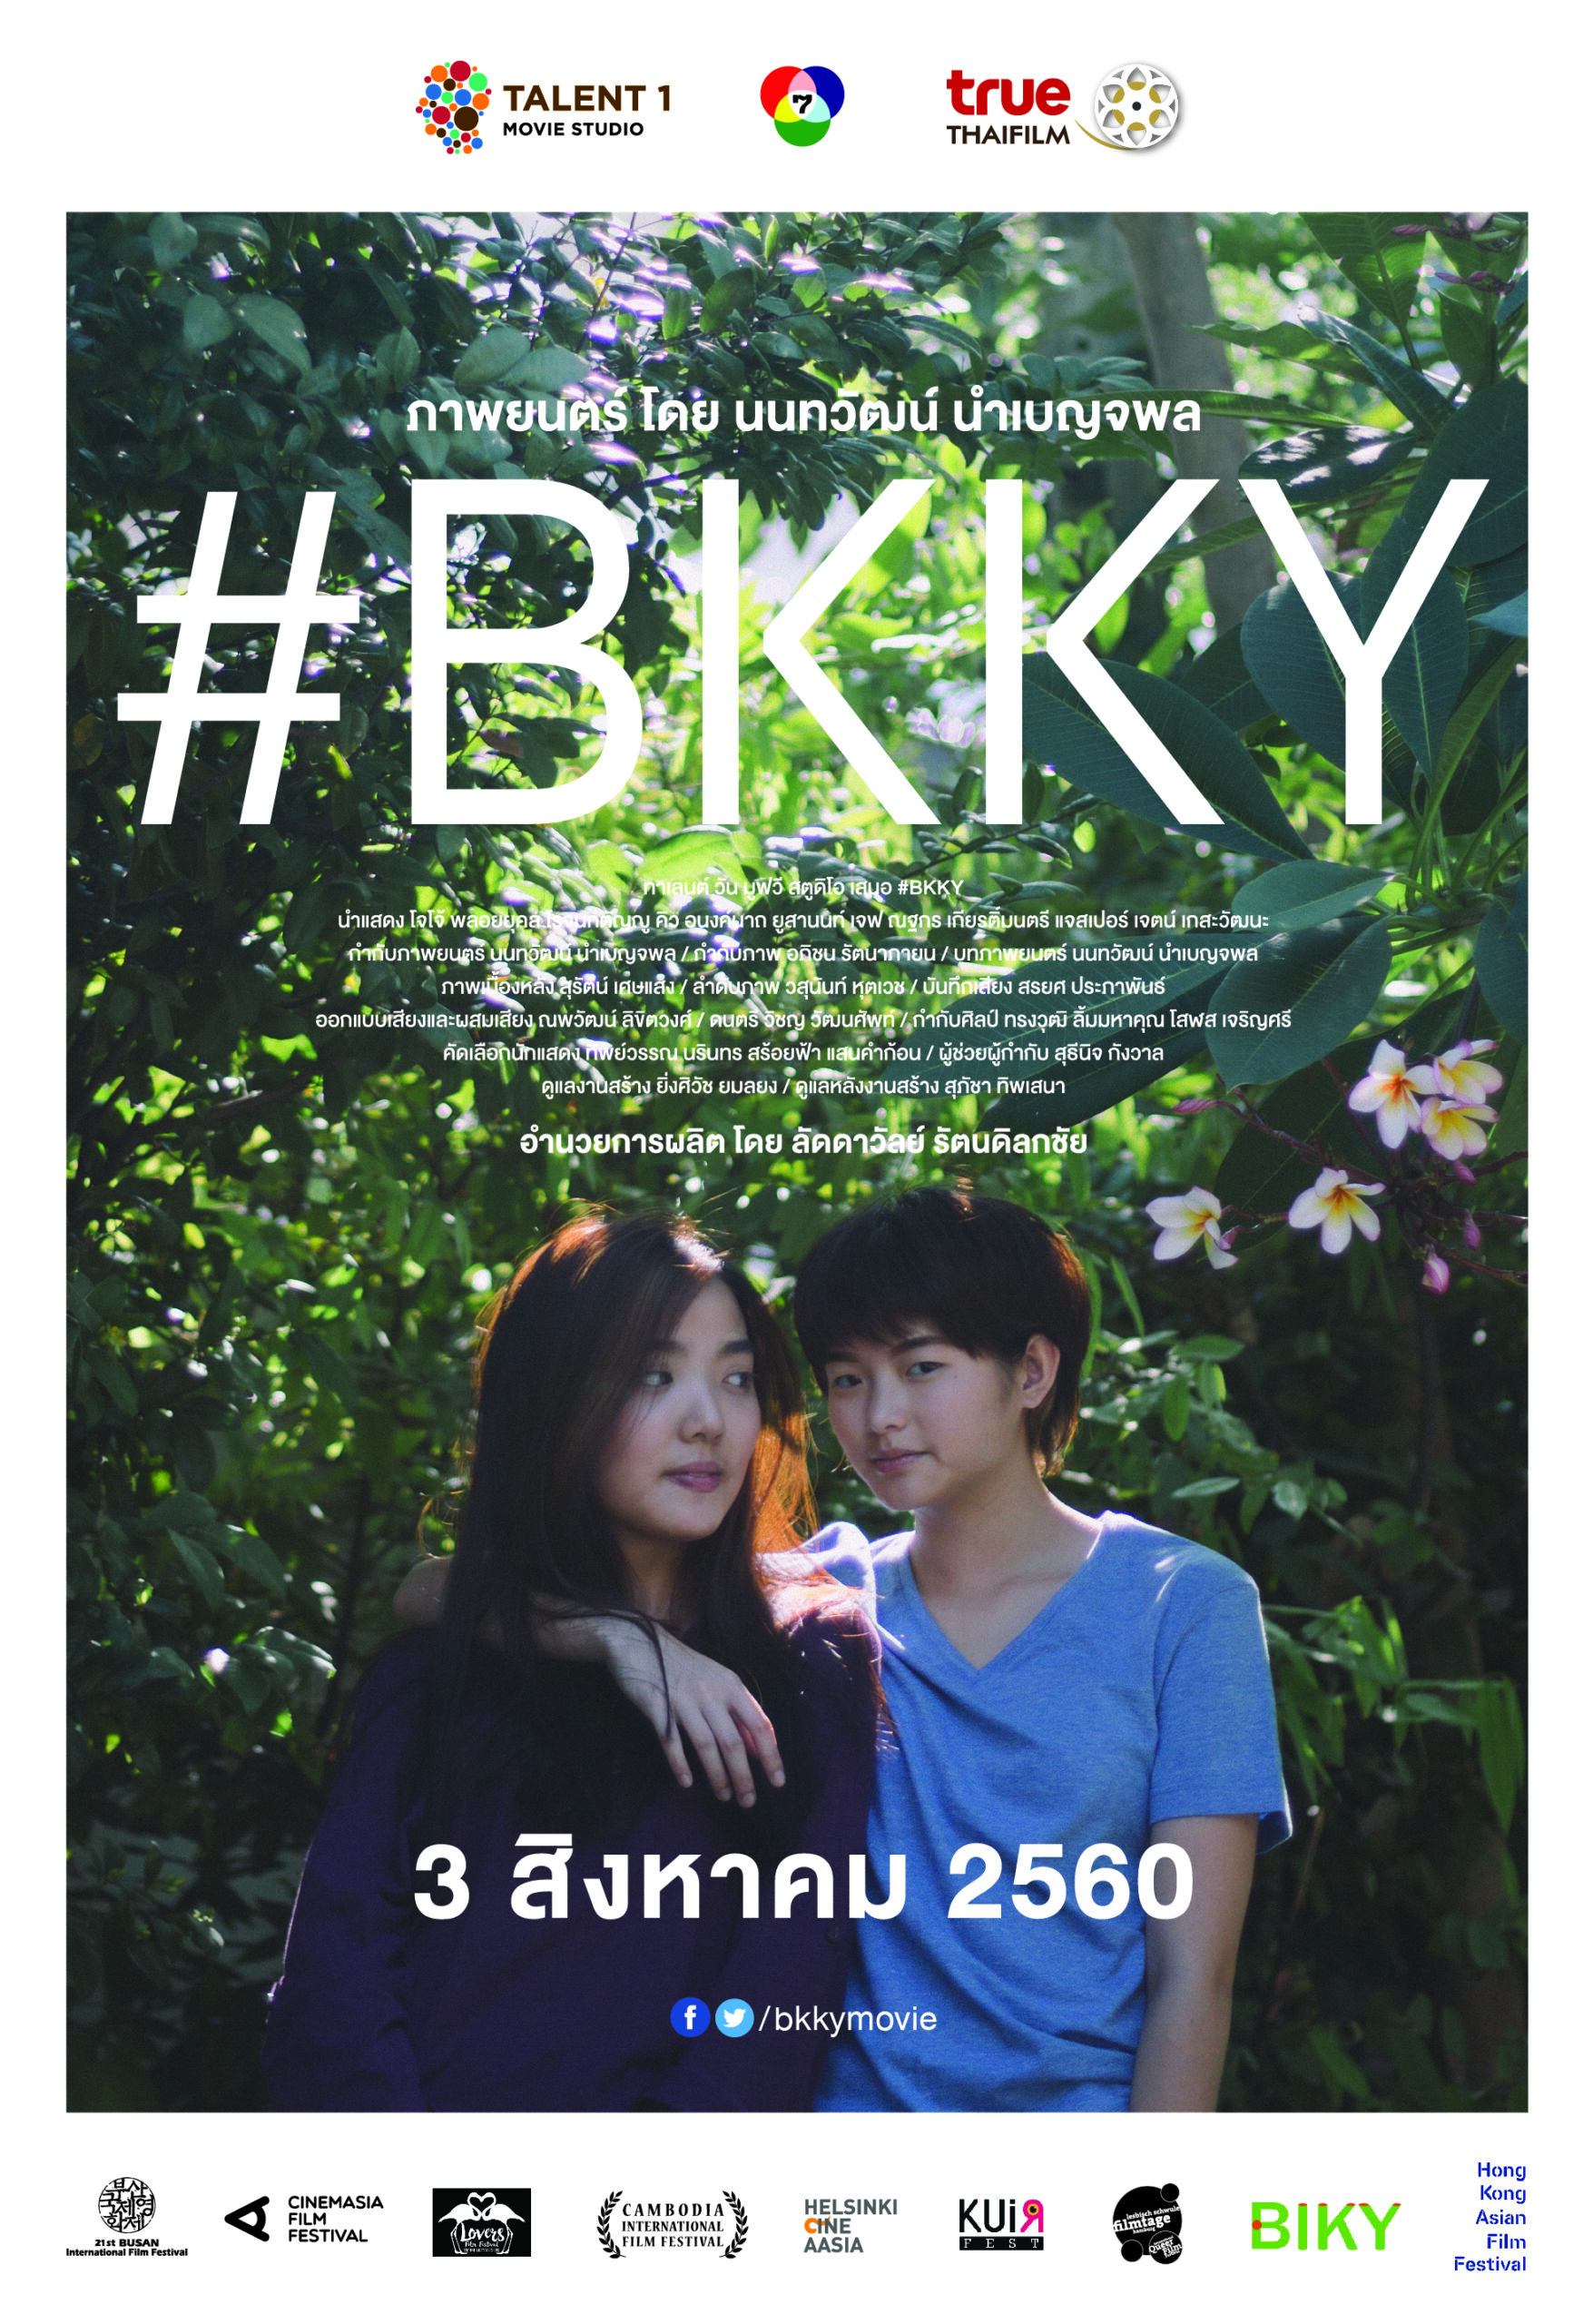 BKKY - Content Thailand